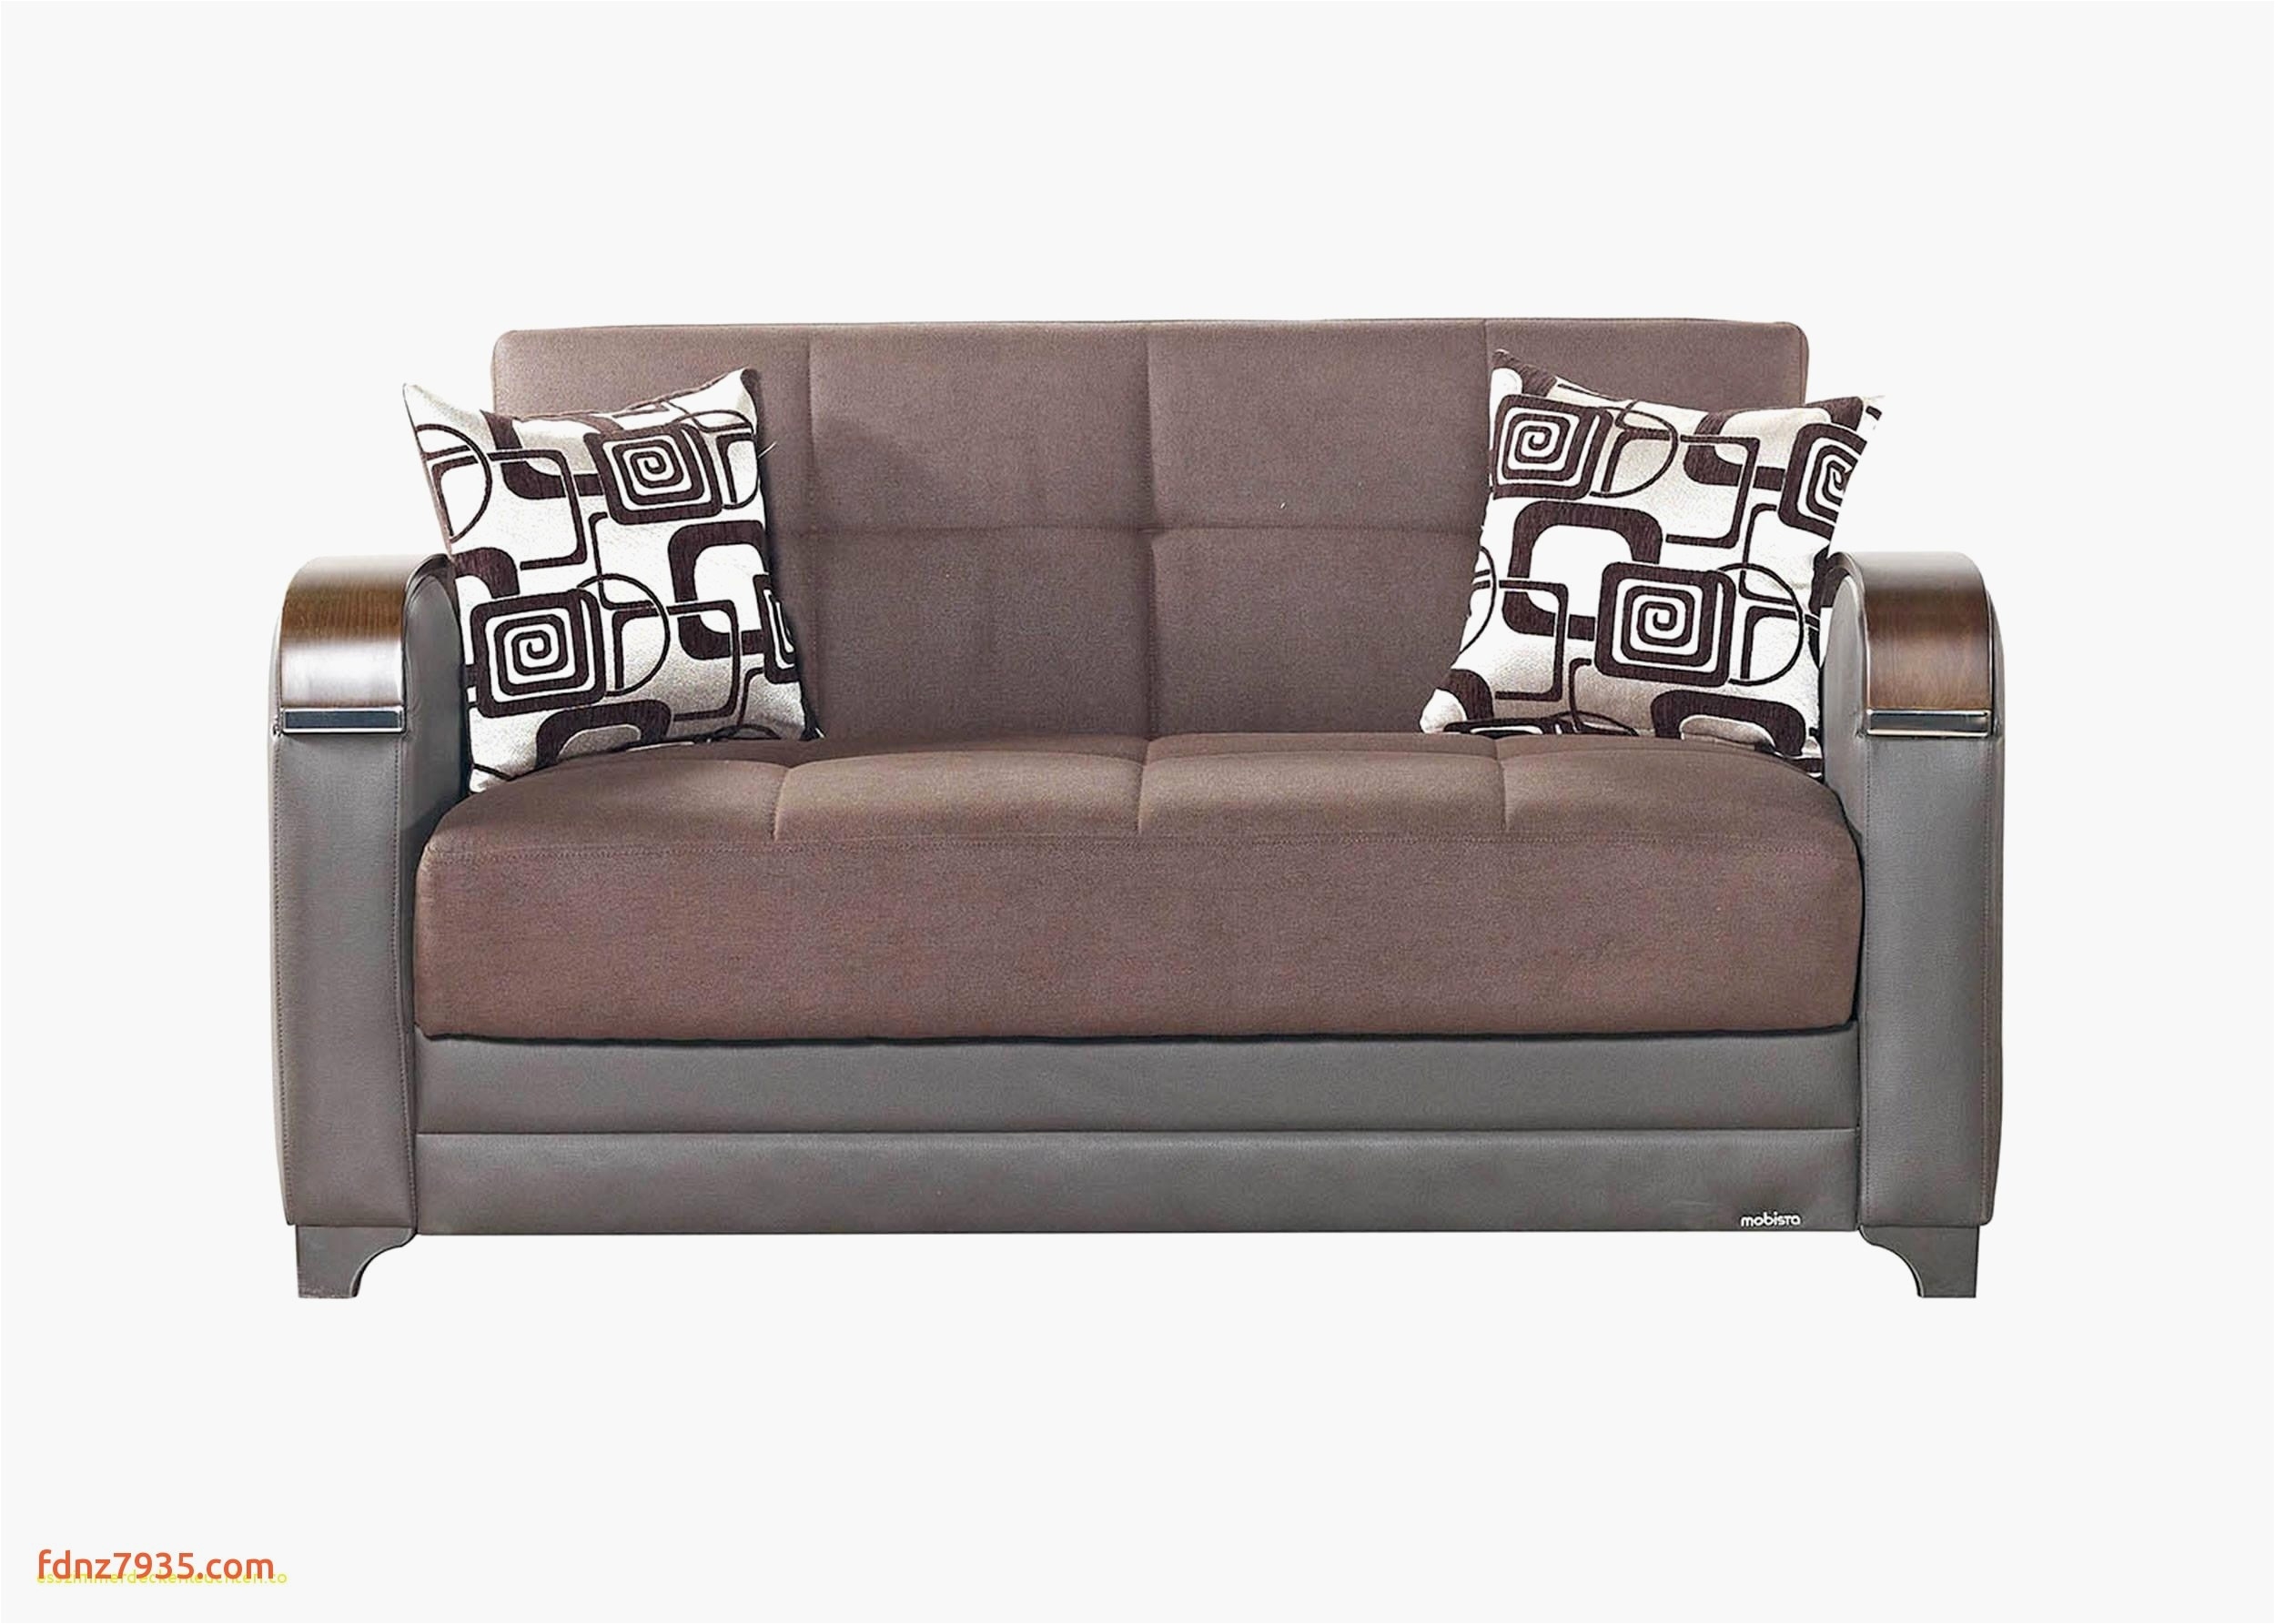 discount furniture springfield mo best of sams club sleeper sofa fresh sofa design collection of